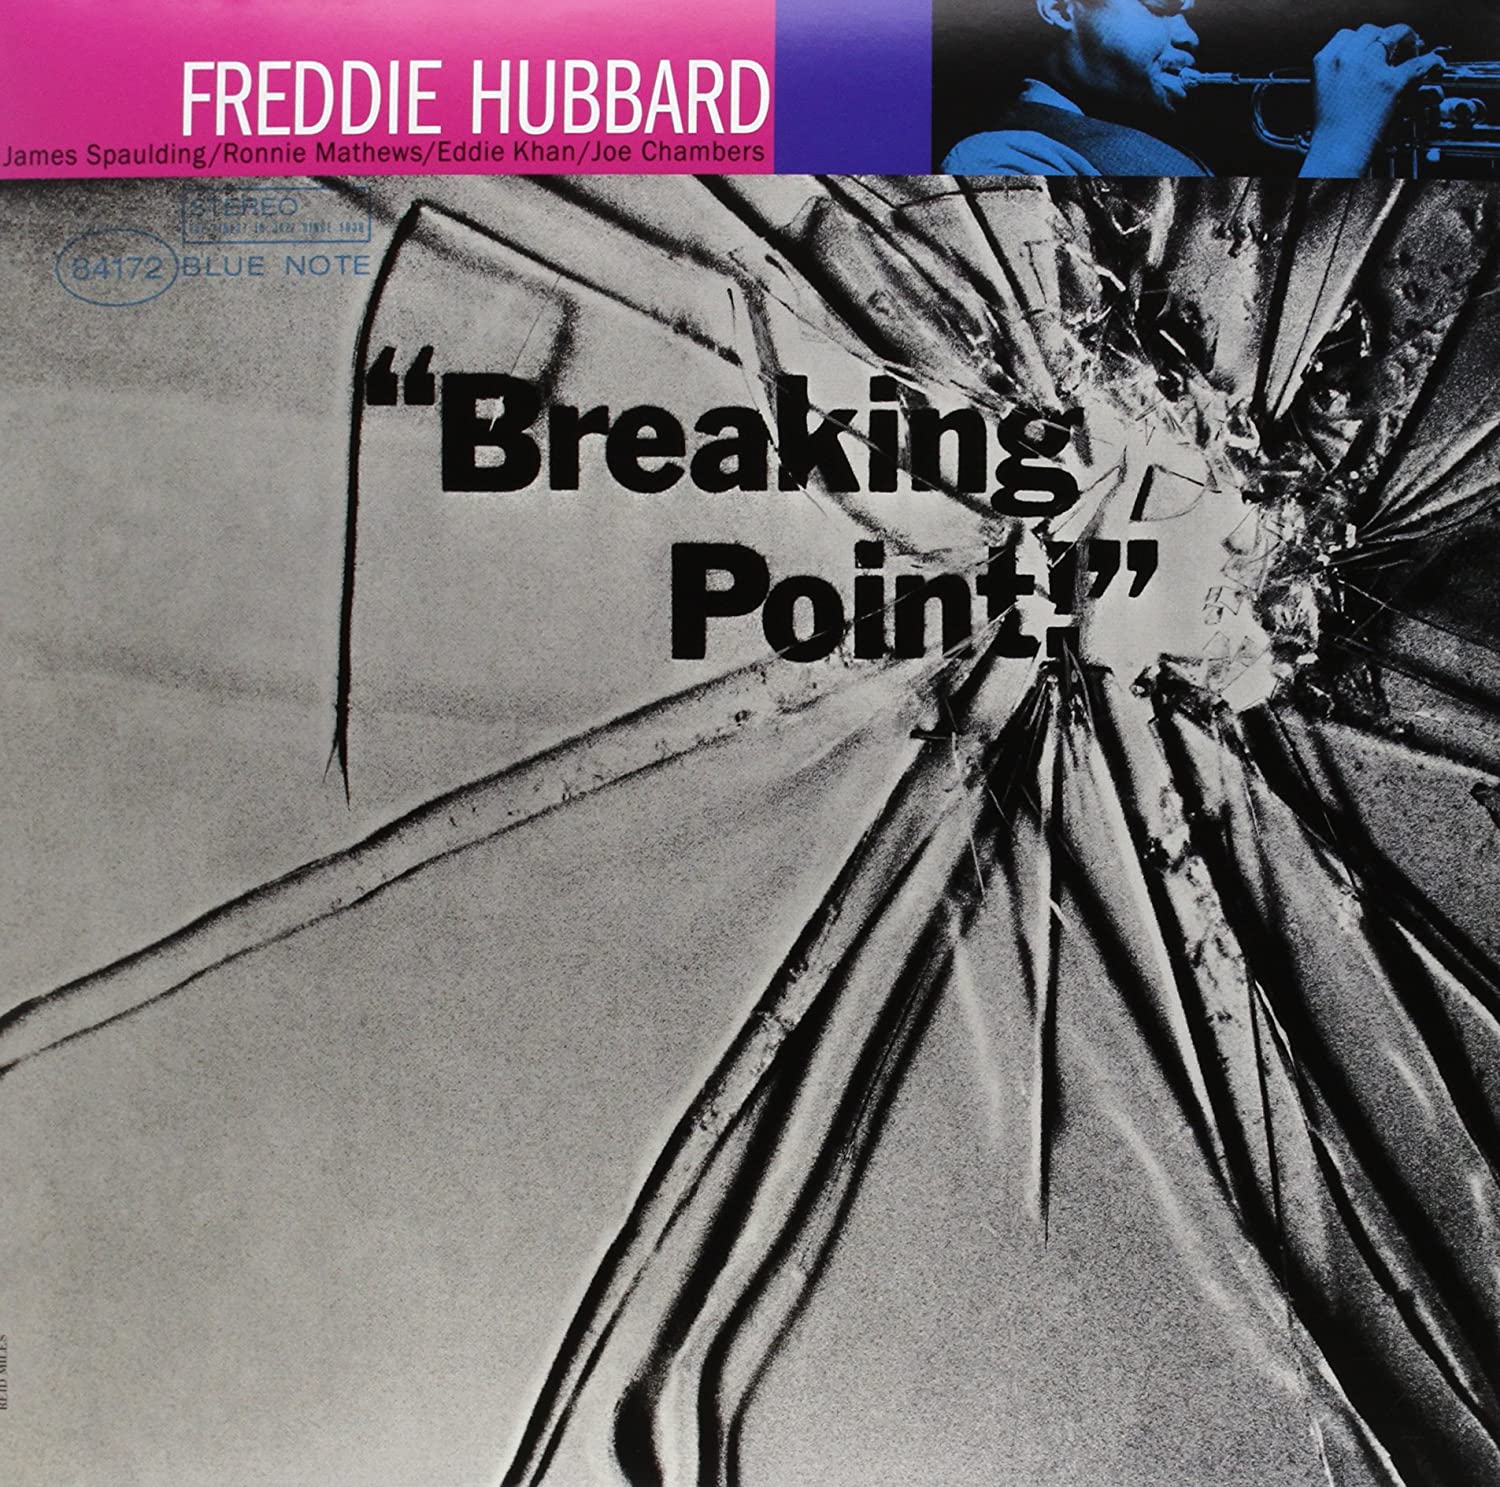 Freddie Hubbard  "Breaking Point" [All Analog 180g Reissue] [Blue Note Tone Poet Series]